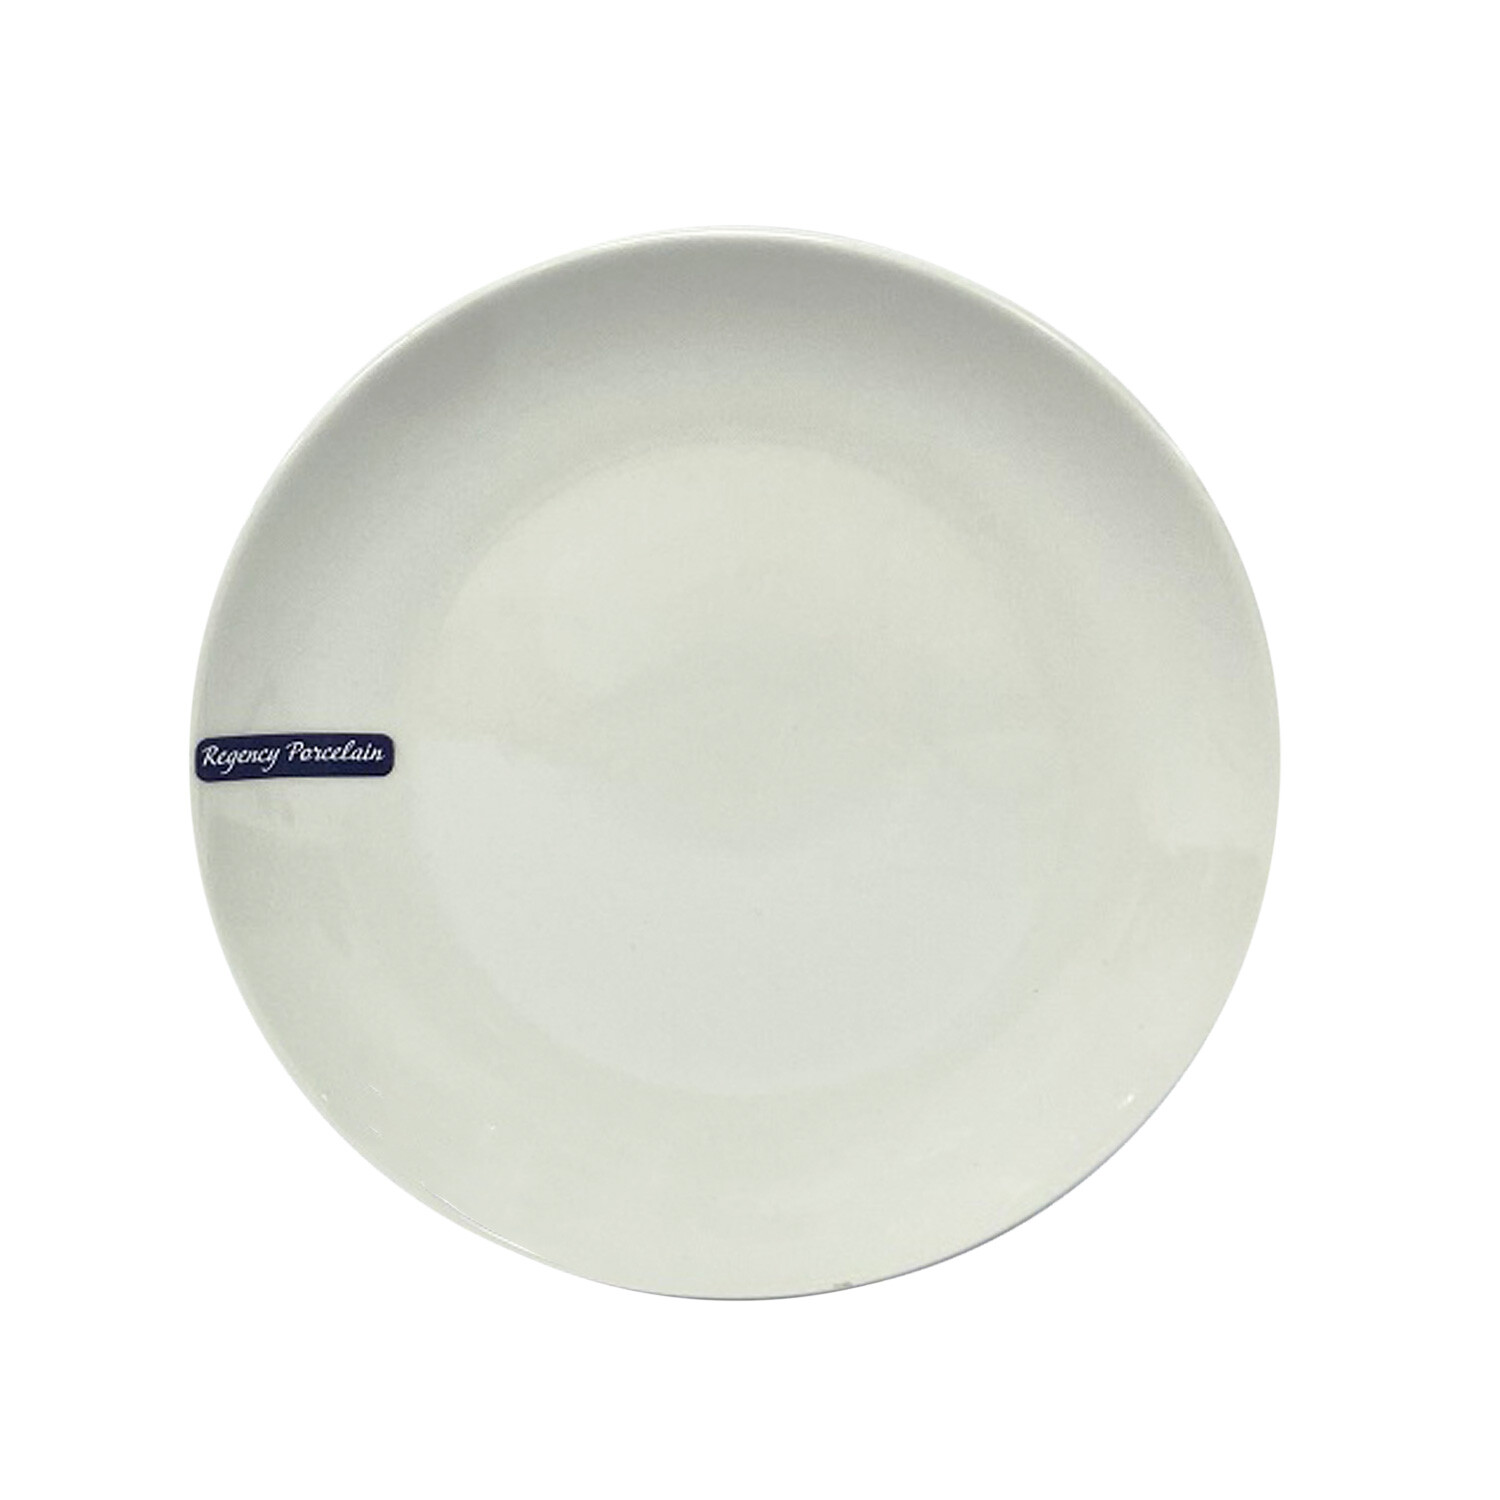 Regency Porcelain Coupe Side Plate - White Image